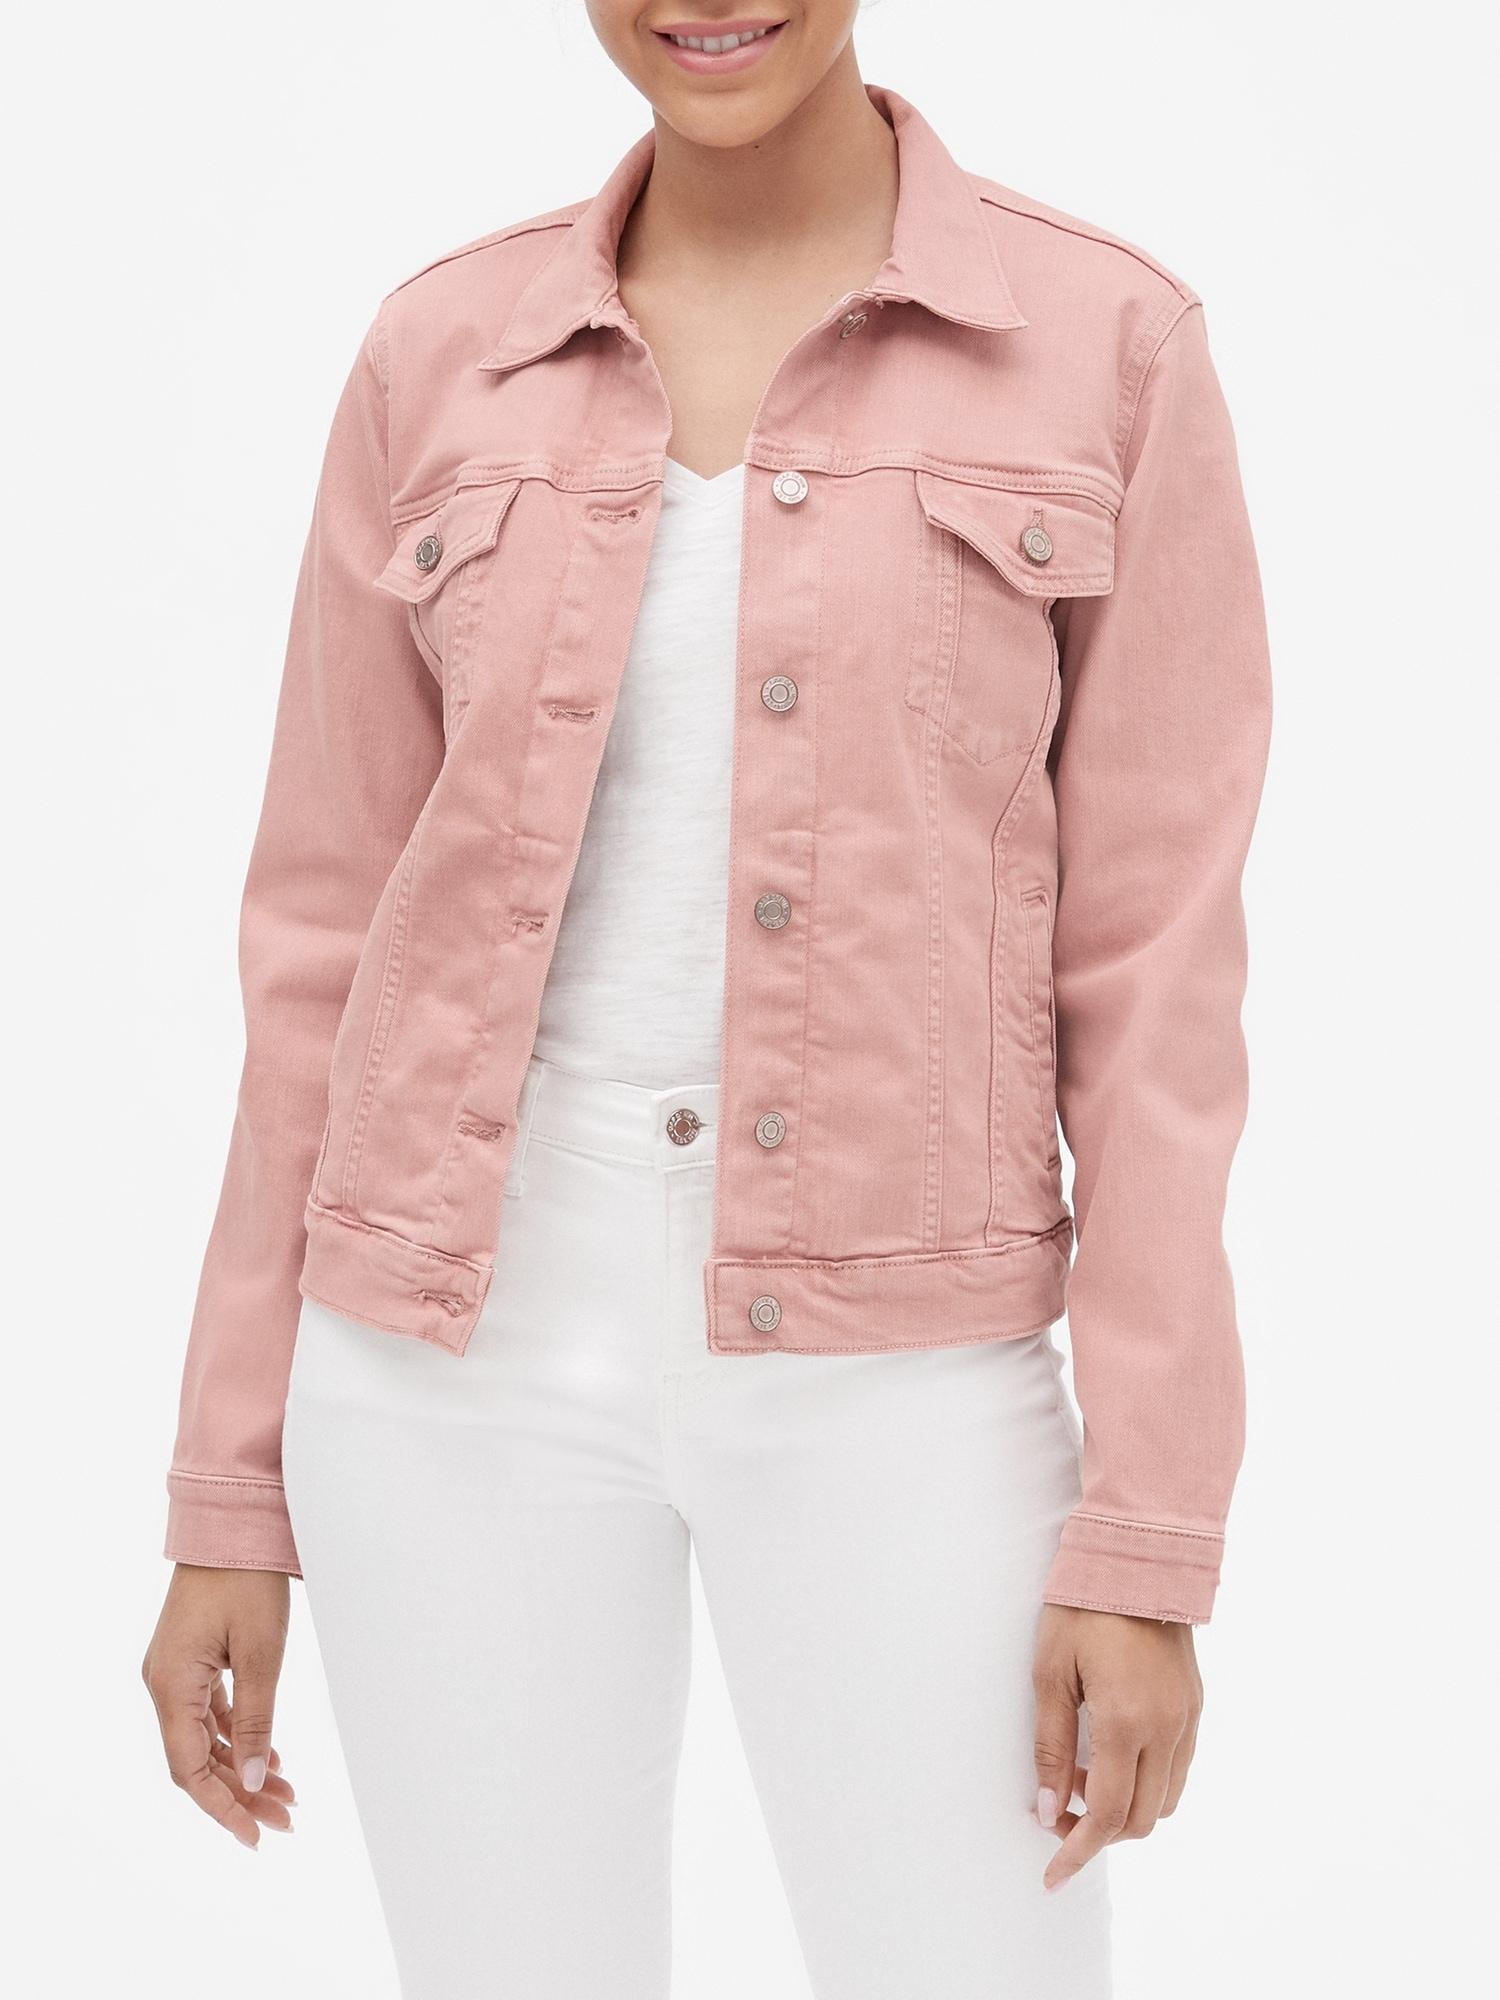 gap pink denim jacket